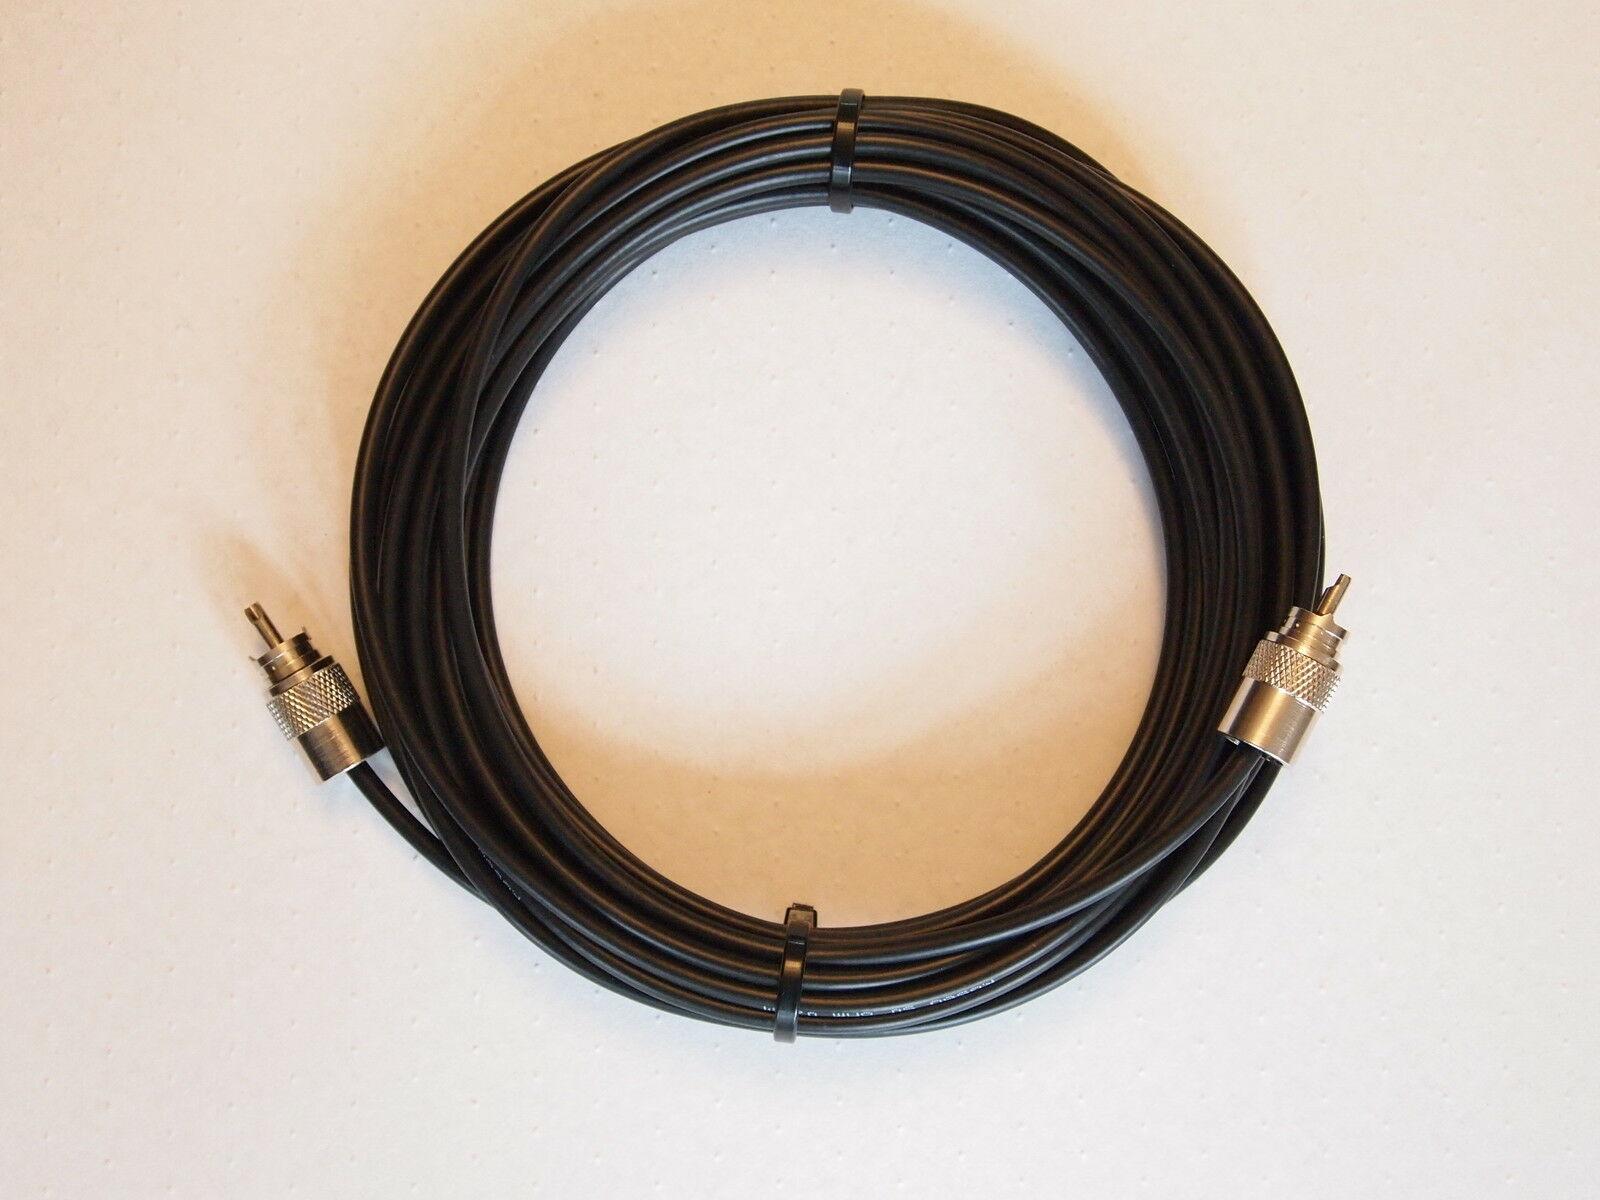 Sigma RG-58 Military Spec Coax cable 25 Metre Lead 2 x PL259 Male Connectors